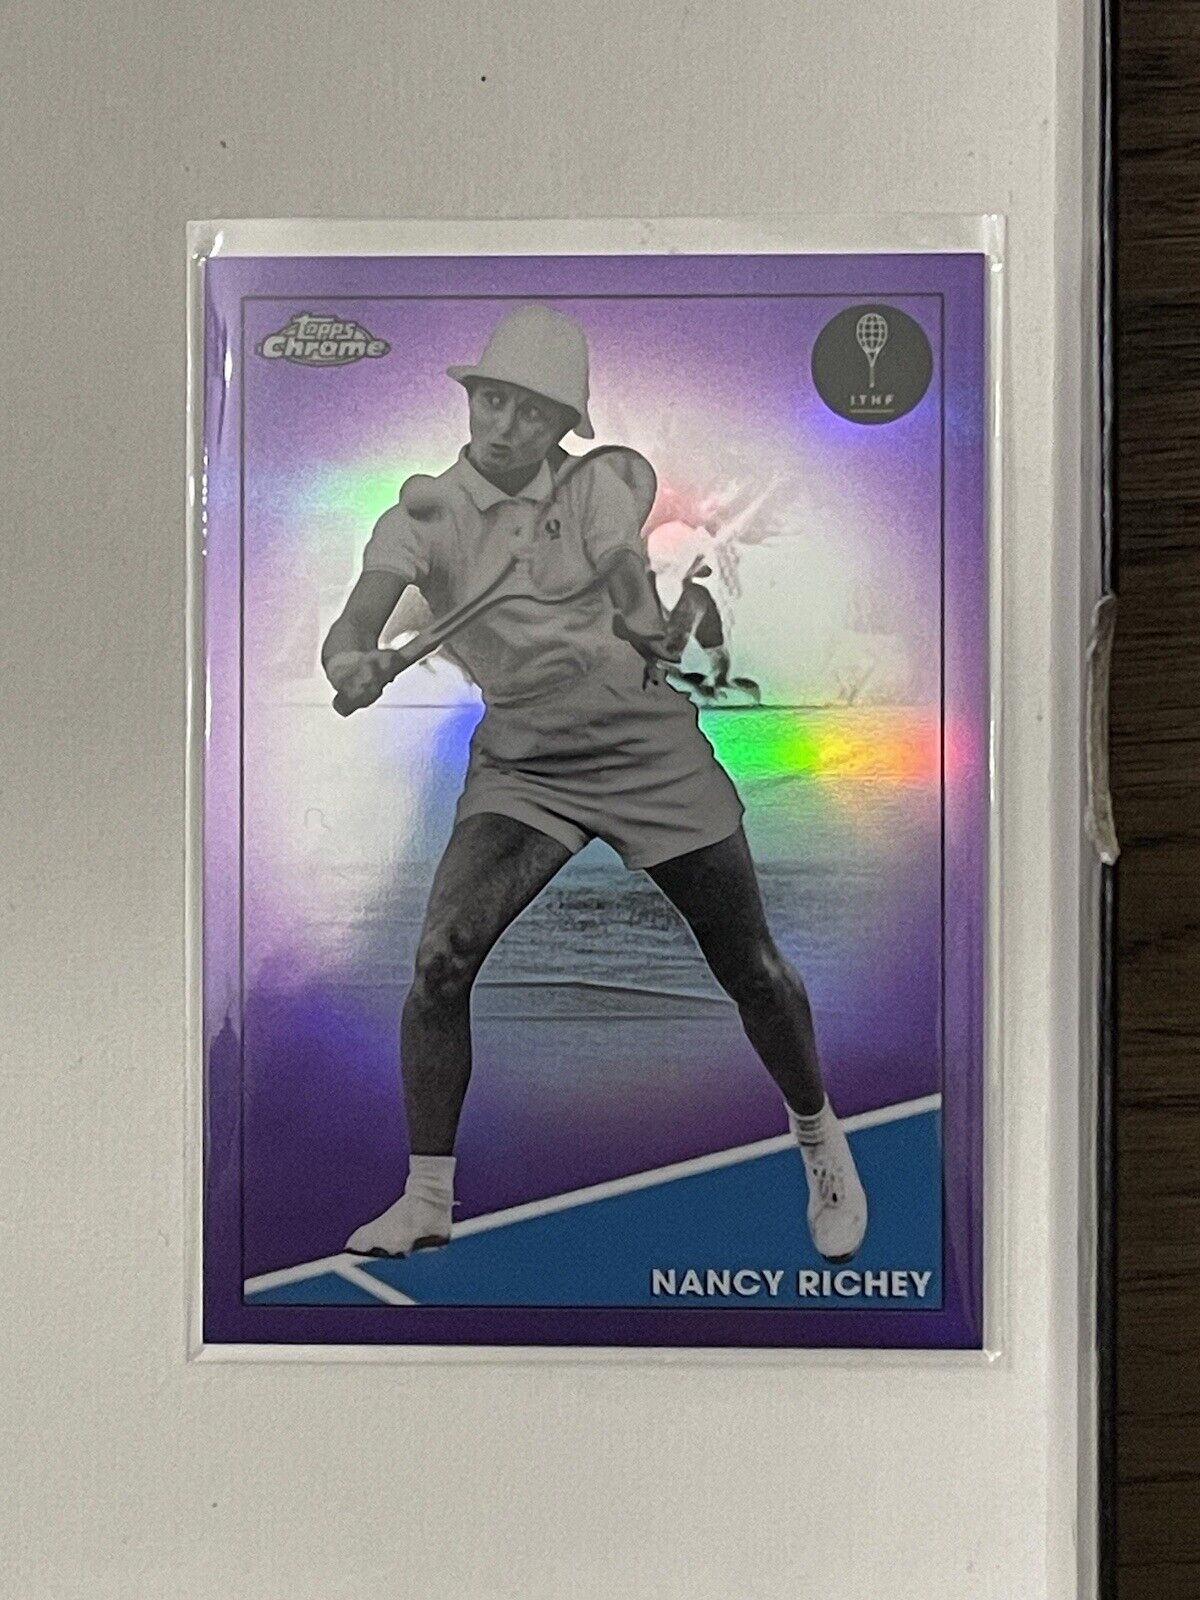 2021 Nancy Richey TOPPS Tennis Purple REFRACTOR #106/199 Card